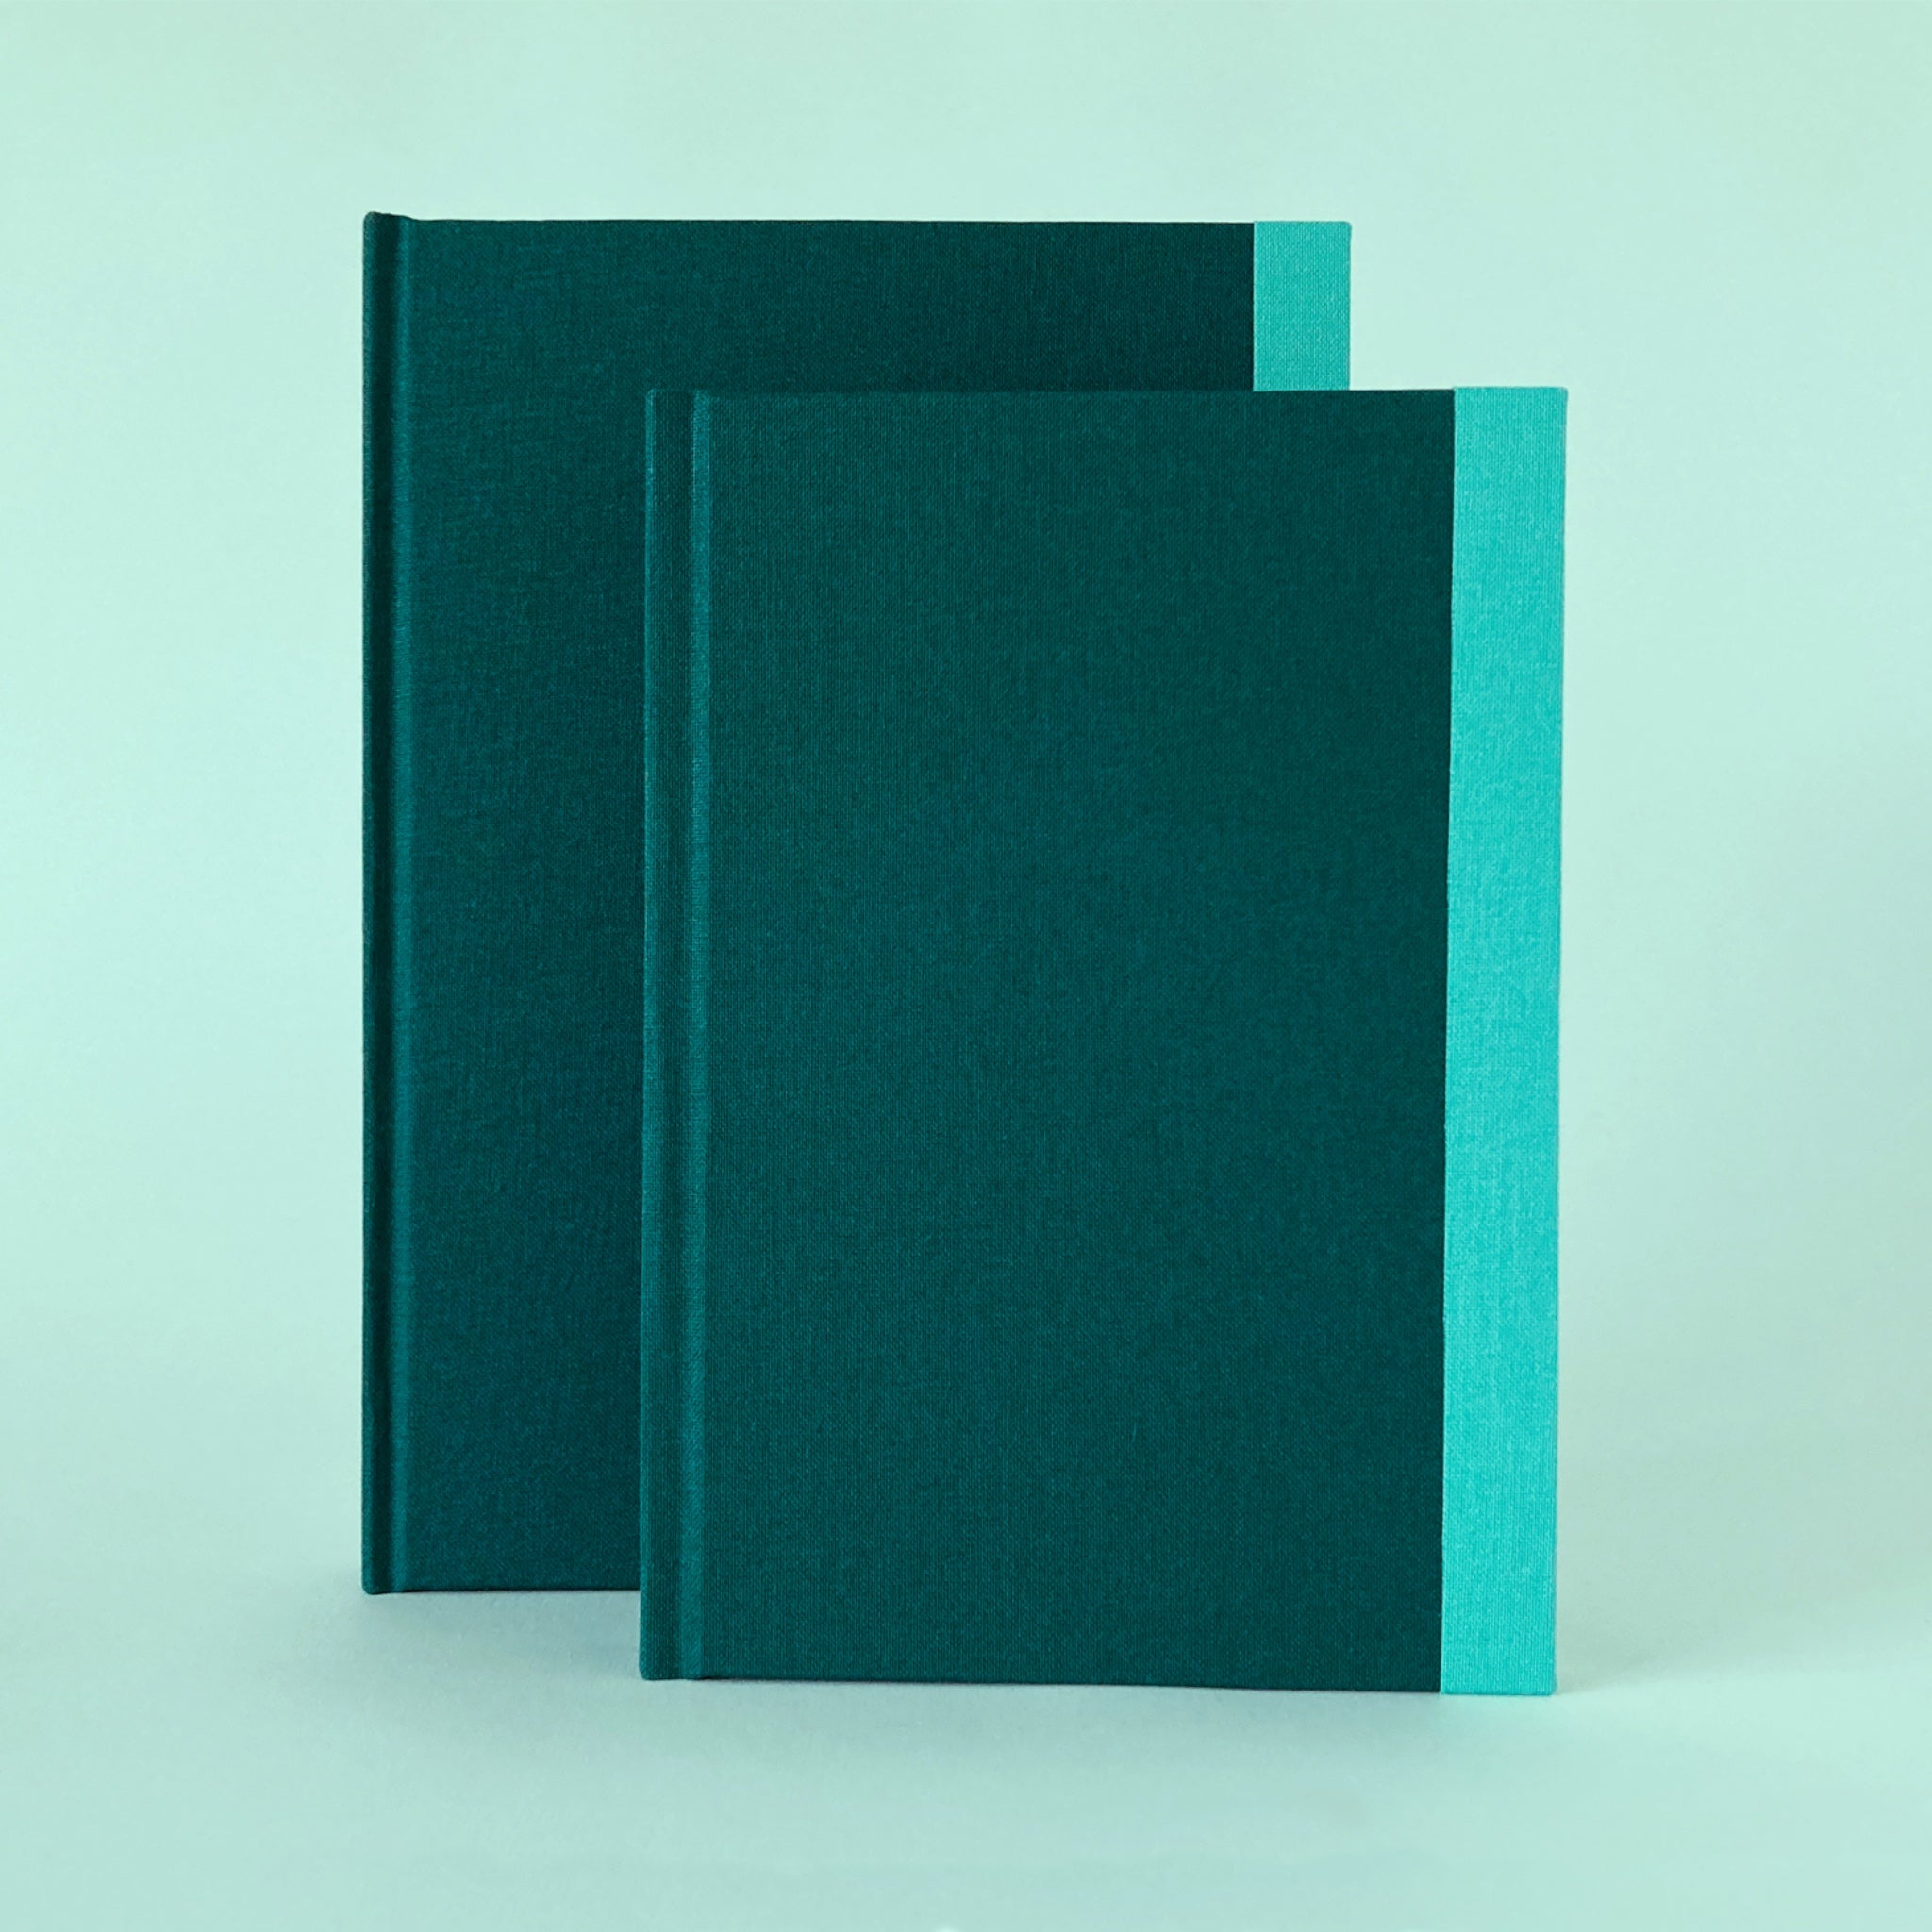 Emerald Green clothbound hardback sketchbooks